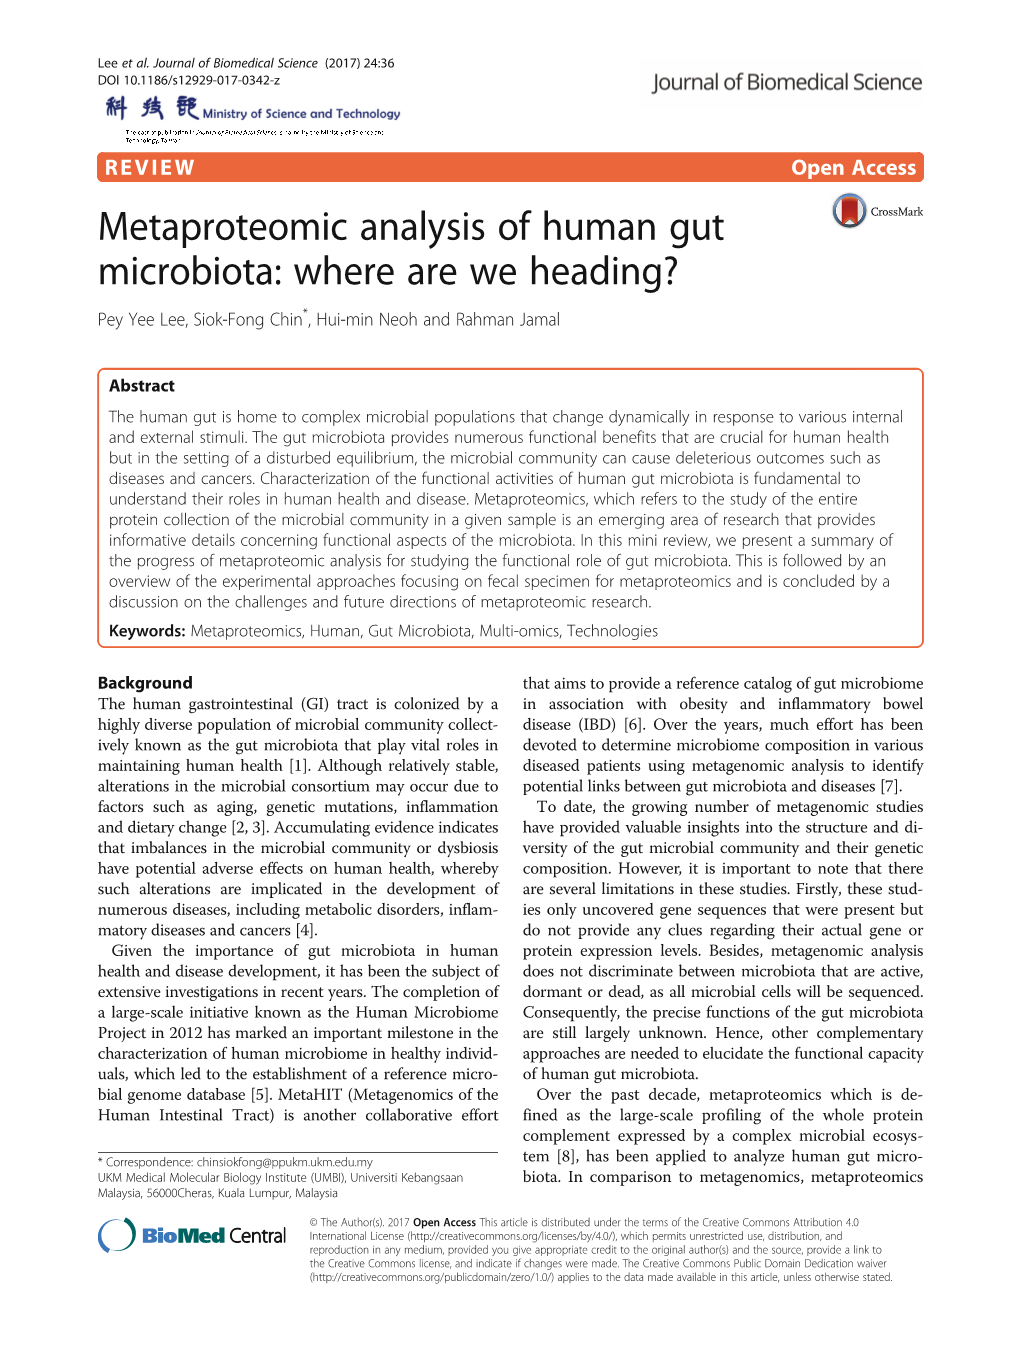 Metaproteomic Analysis of Human Gut Microbiota: Where Are We Heading? Pey Yee Lee, Siok-Fong Chin*, Hui-Min Neoh and Rahman Jamal